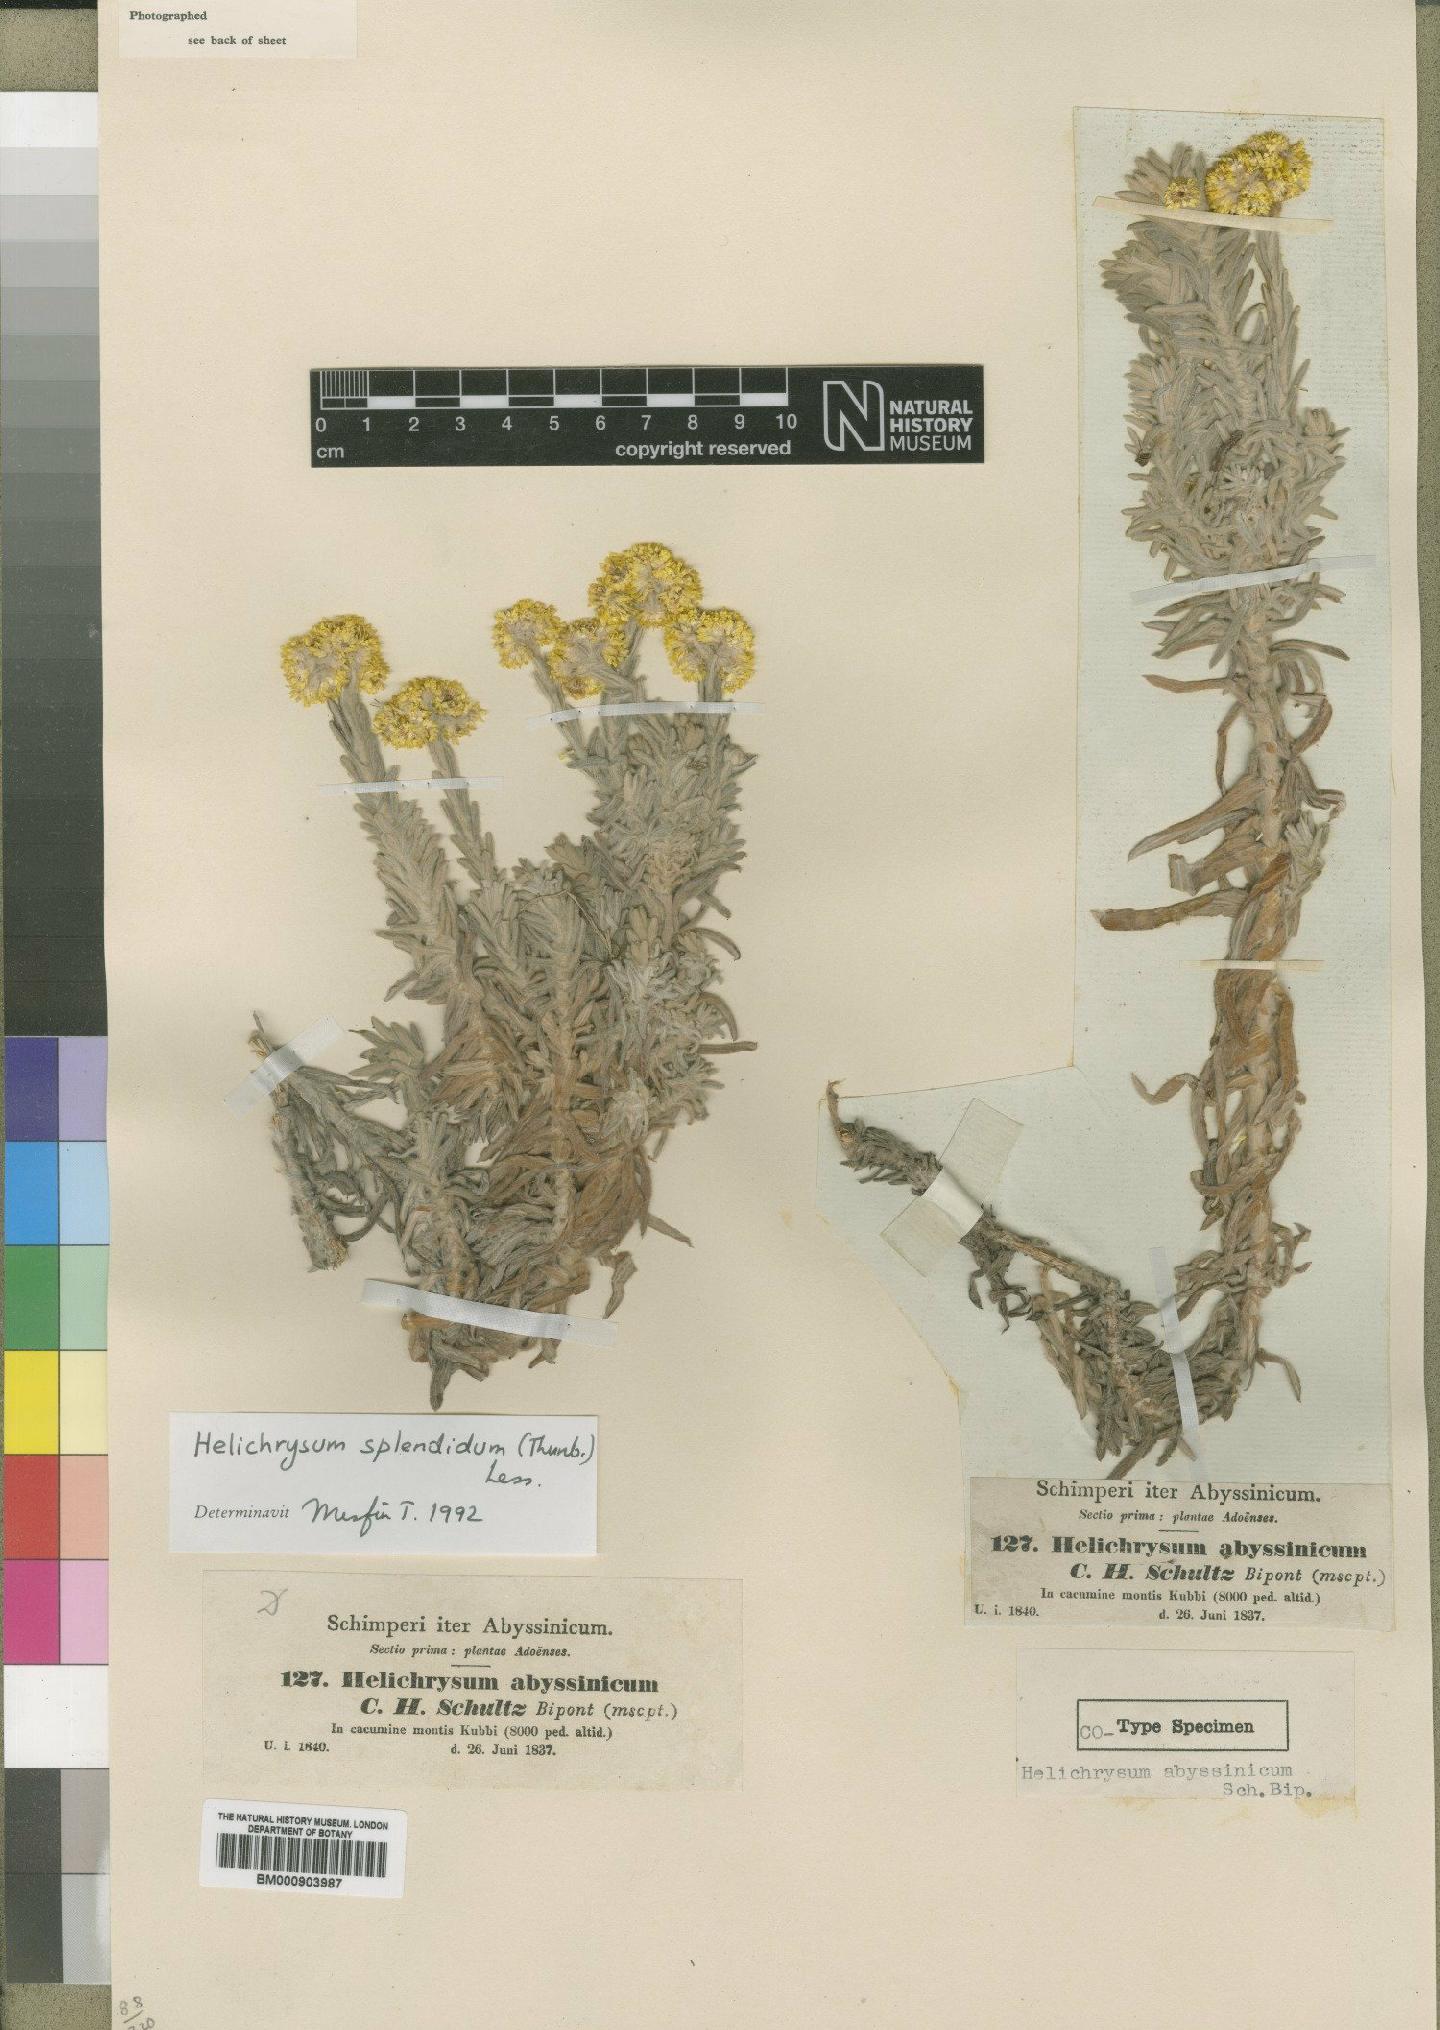 To NHMUK collection (Helichrysum splendidum (Thunb.) Less; TYPE; NHMUK:ecatalogue:4529036)